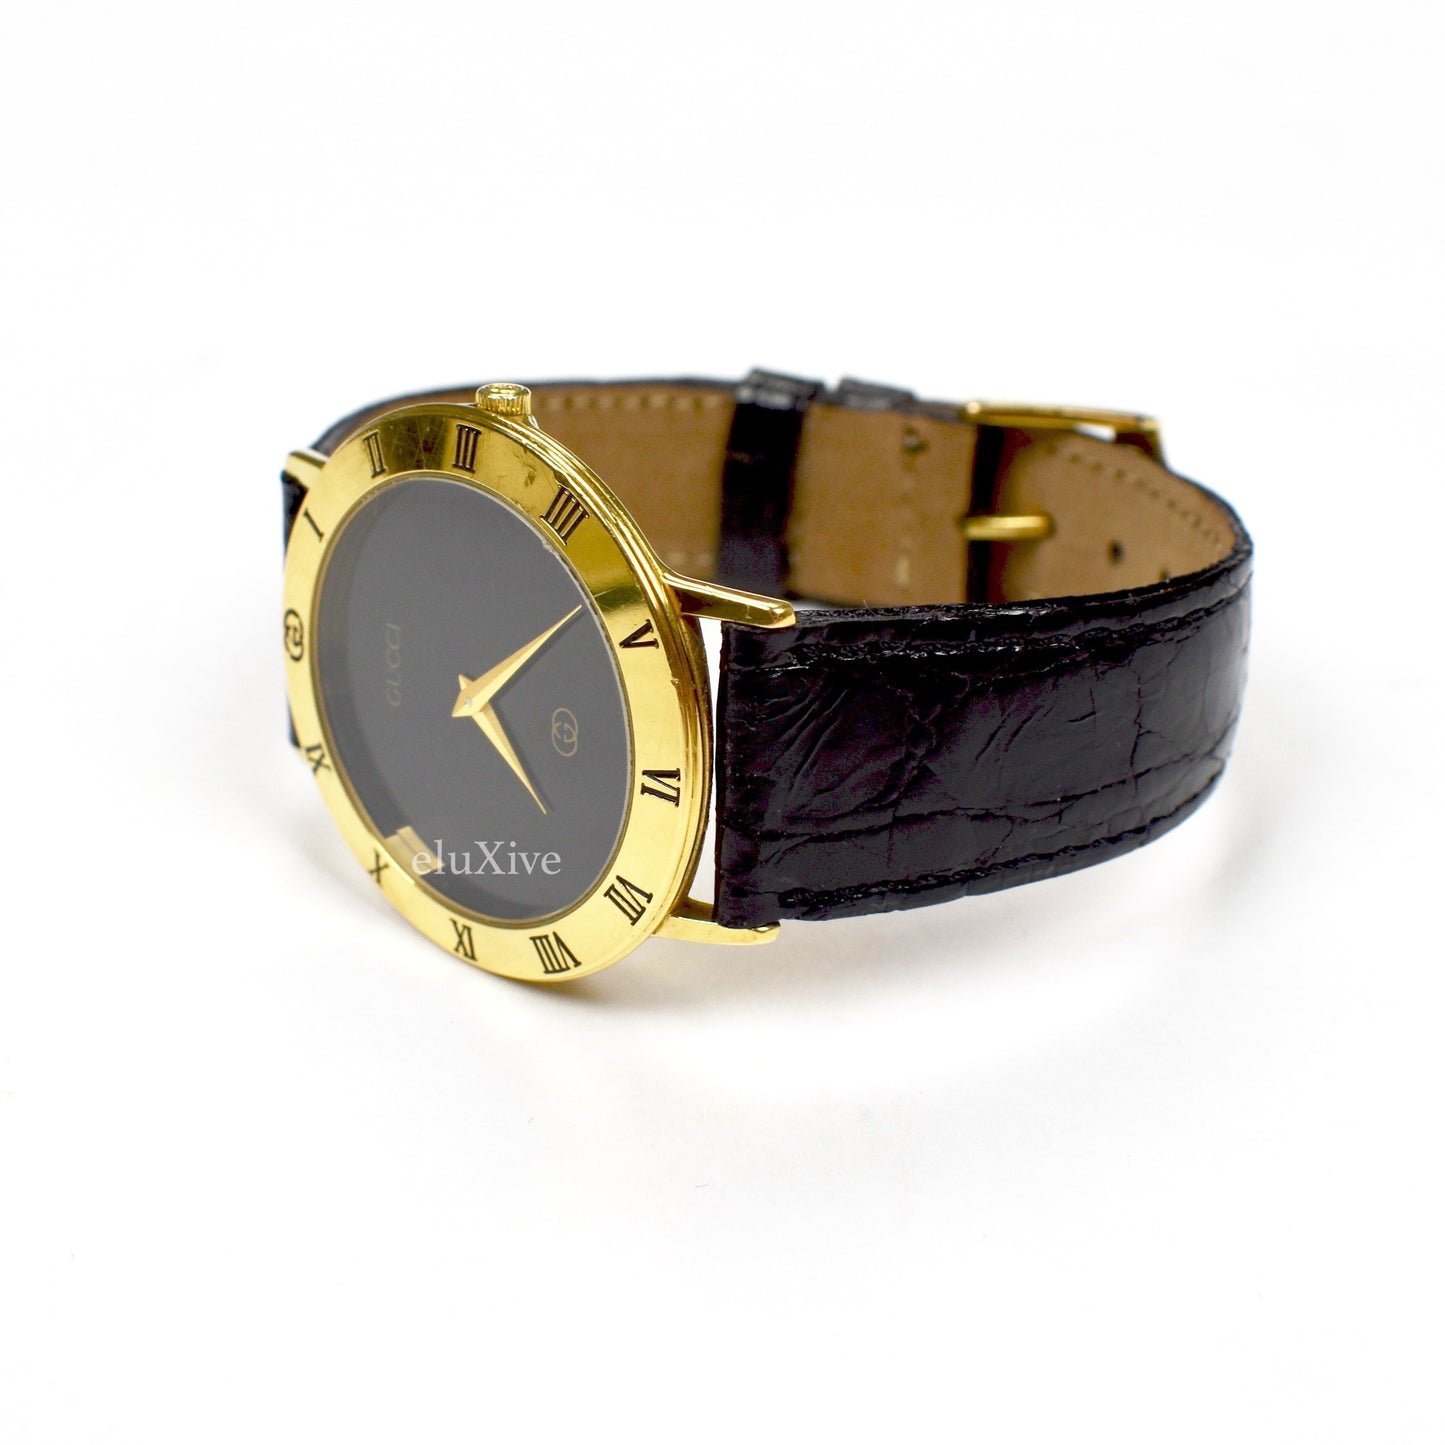 Gucci - 3001M Gold Black Dial Watch